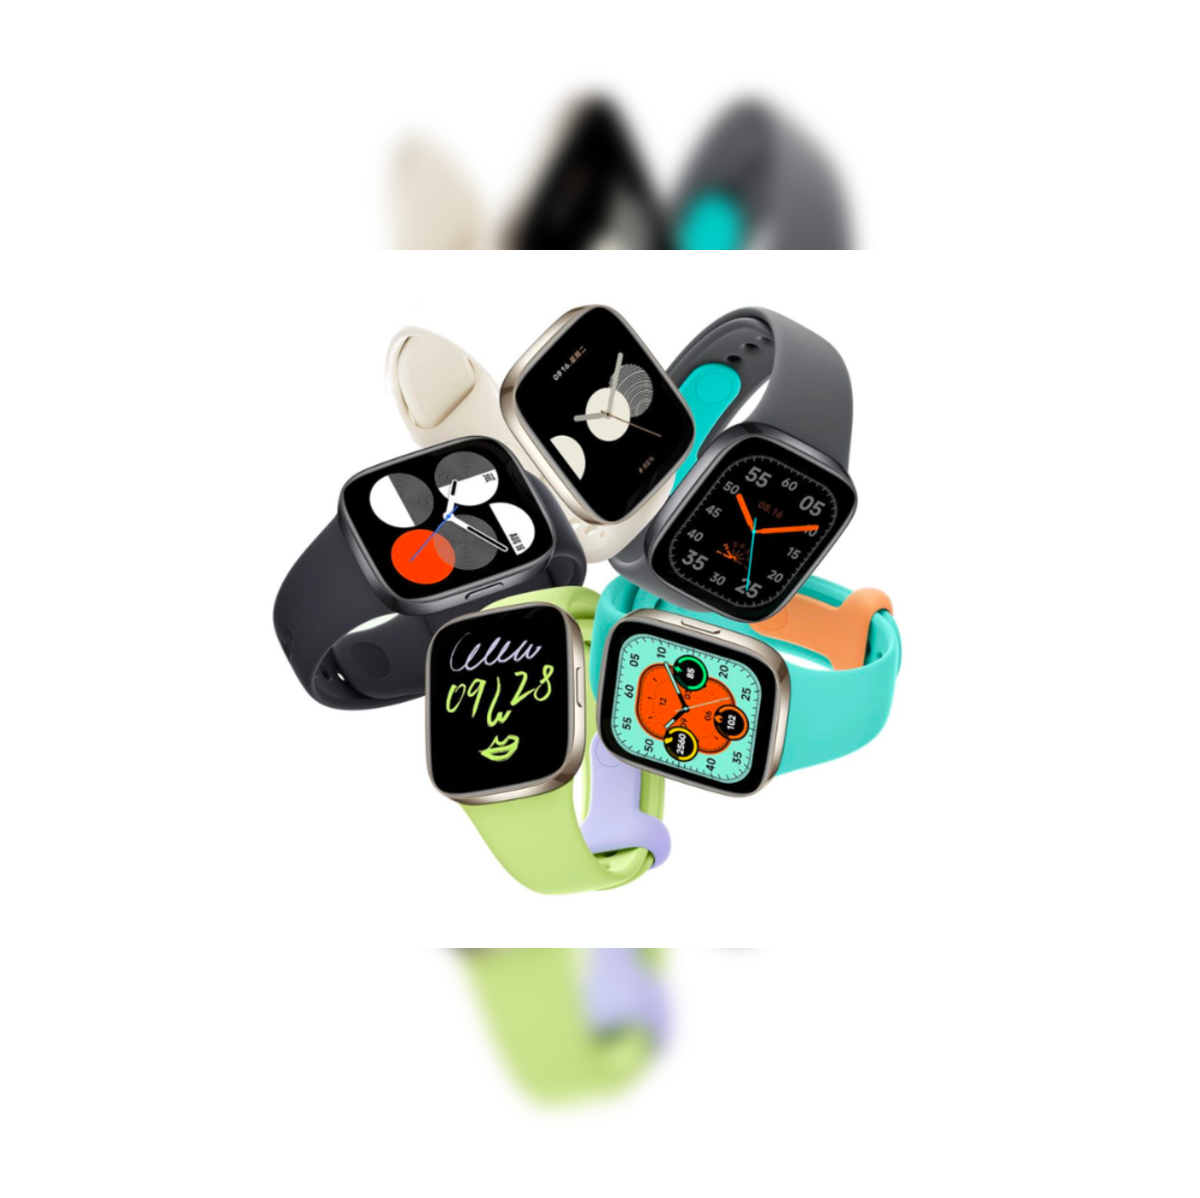 Global Version xiaomi Redmi Watch 3 GPS Smart Watch AMOLED Screen Bluetooth  Call